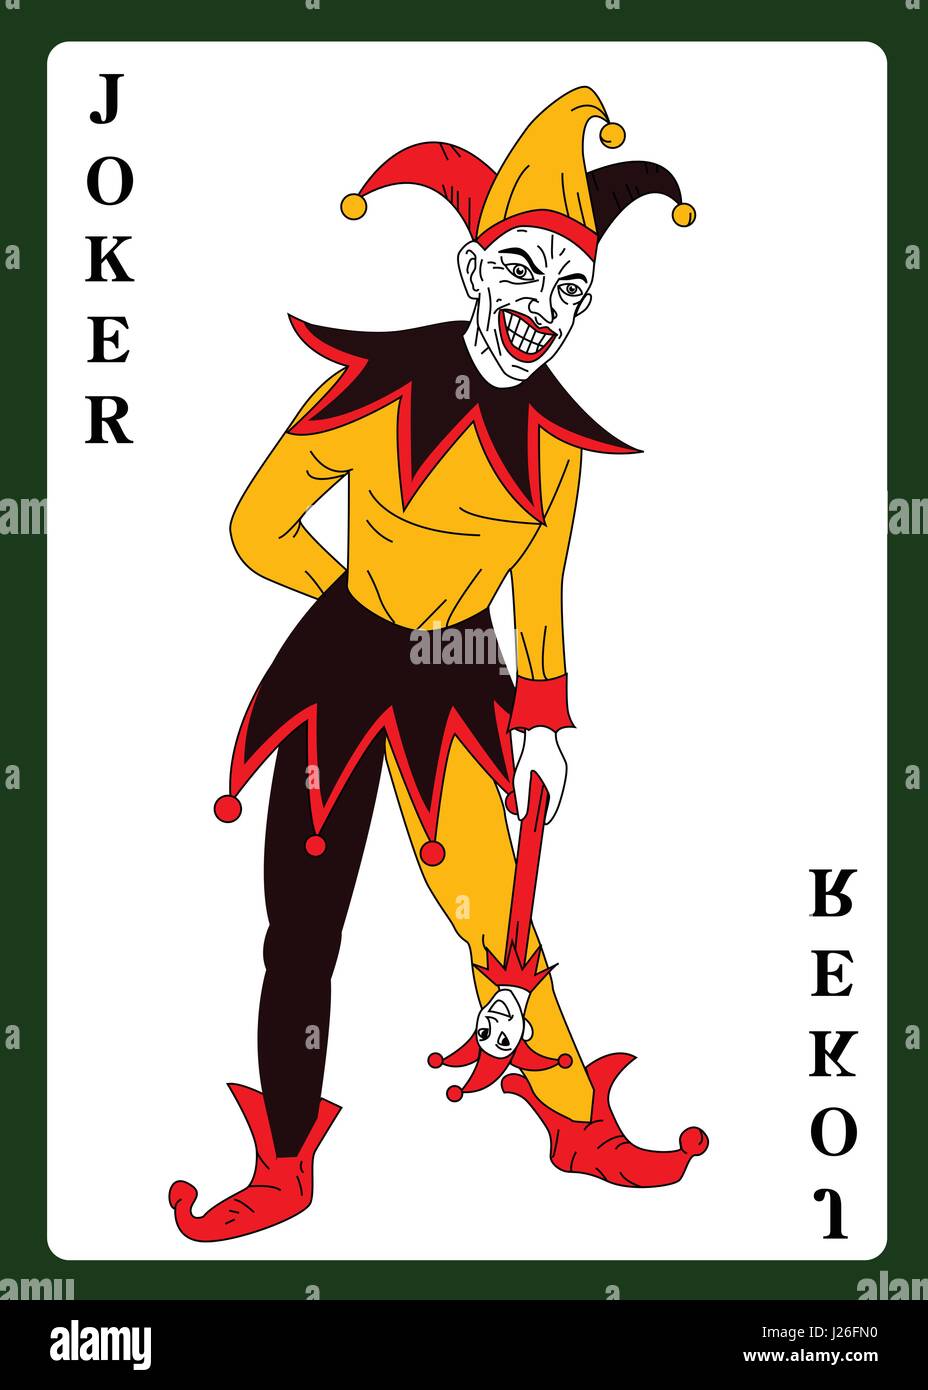 Joker en costume coloré jeu de carte Image Vectorielle Stock - Alamy